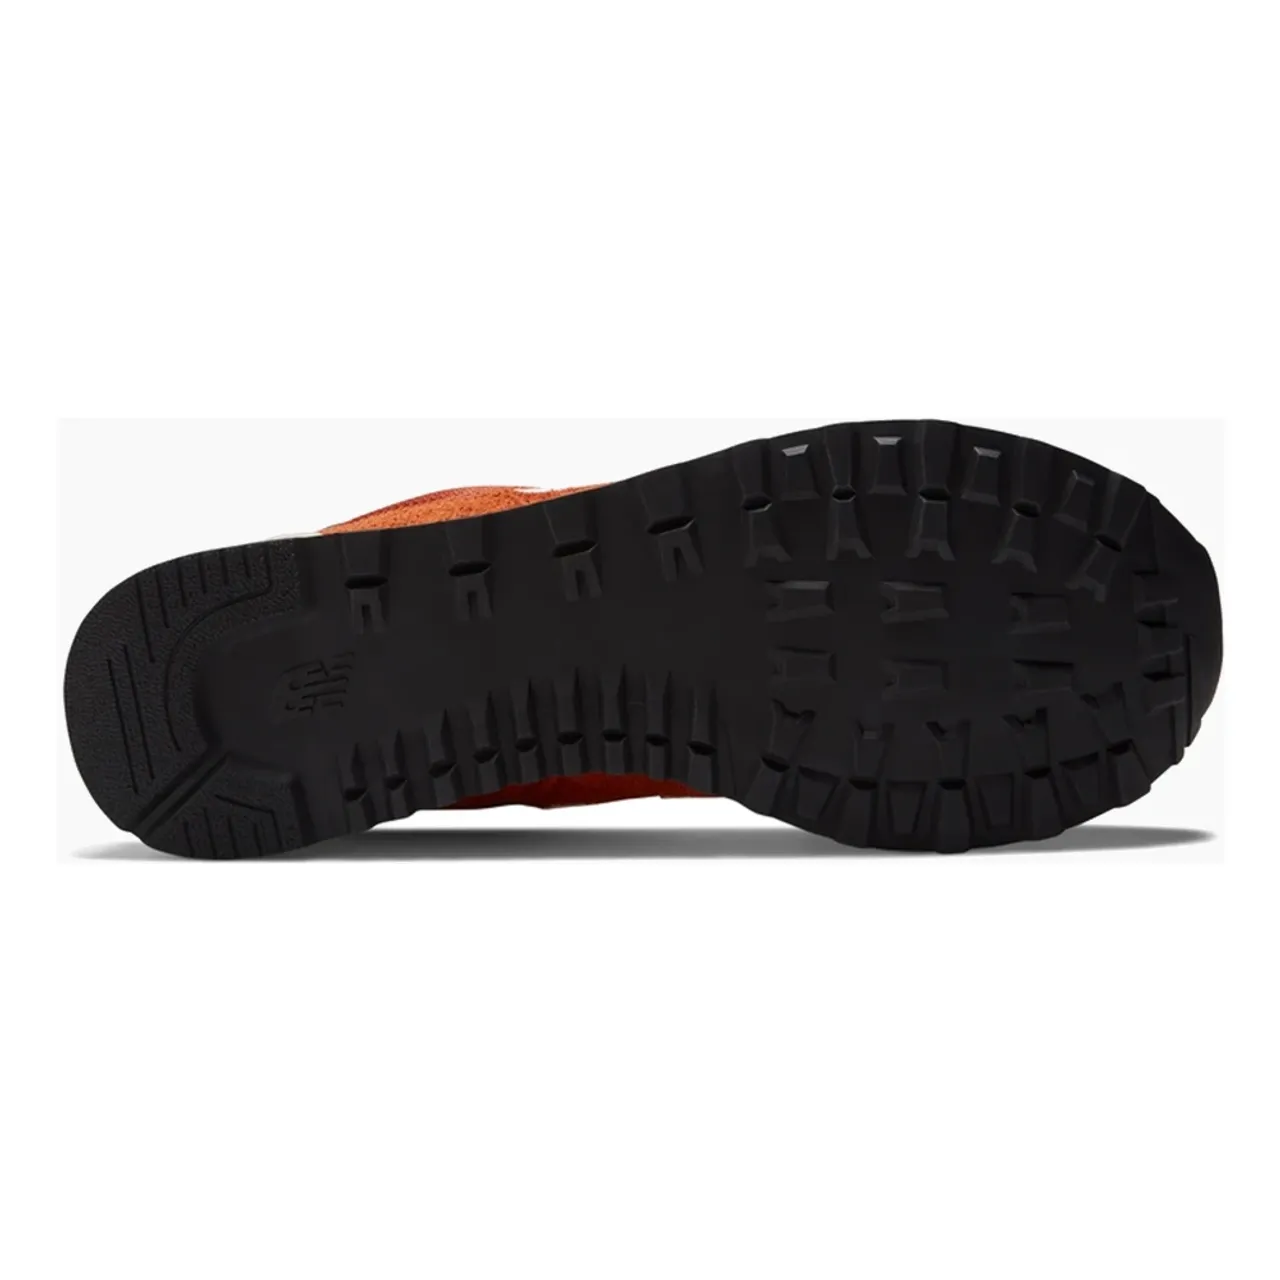 Premium OG Pack Orange Sneakers New Balance